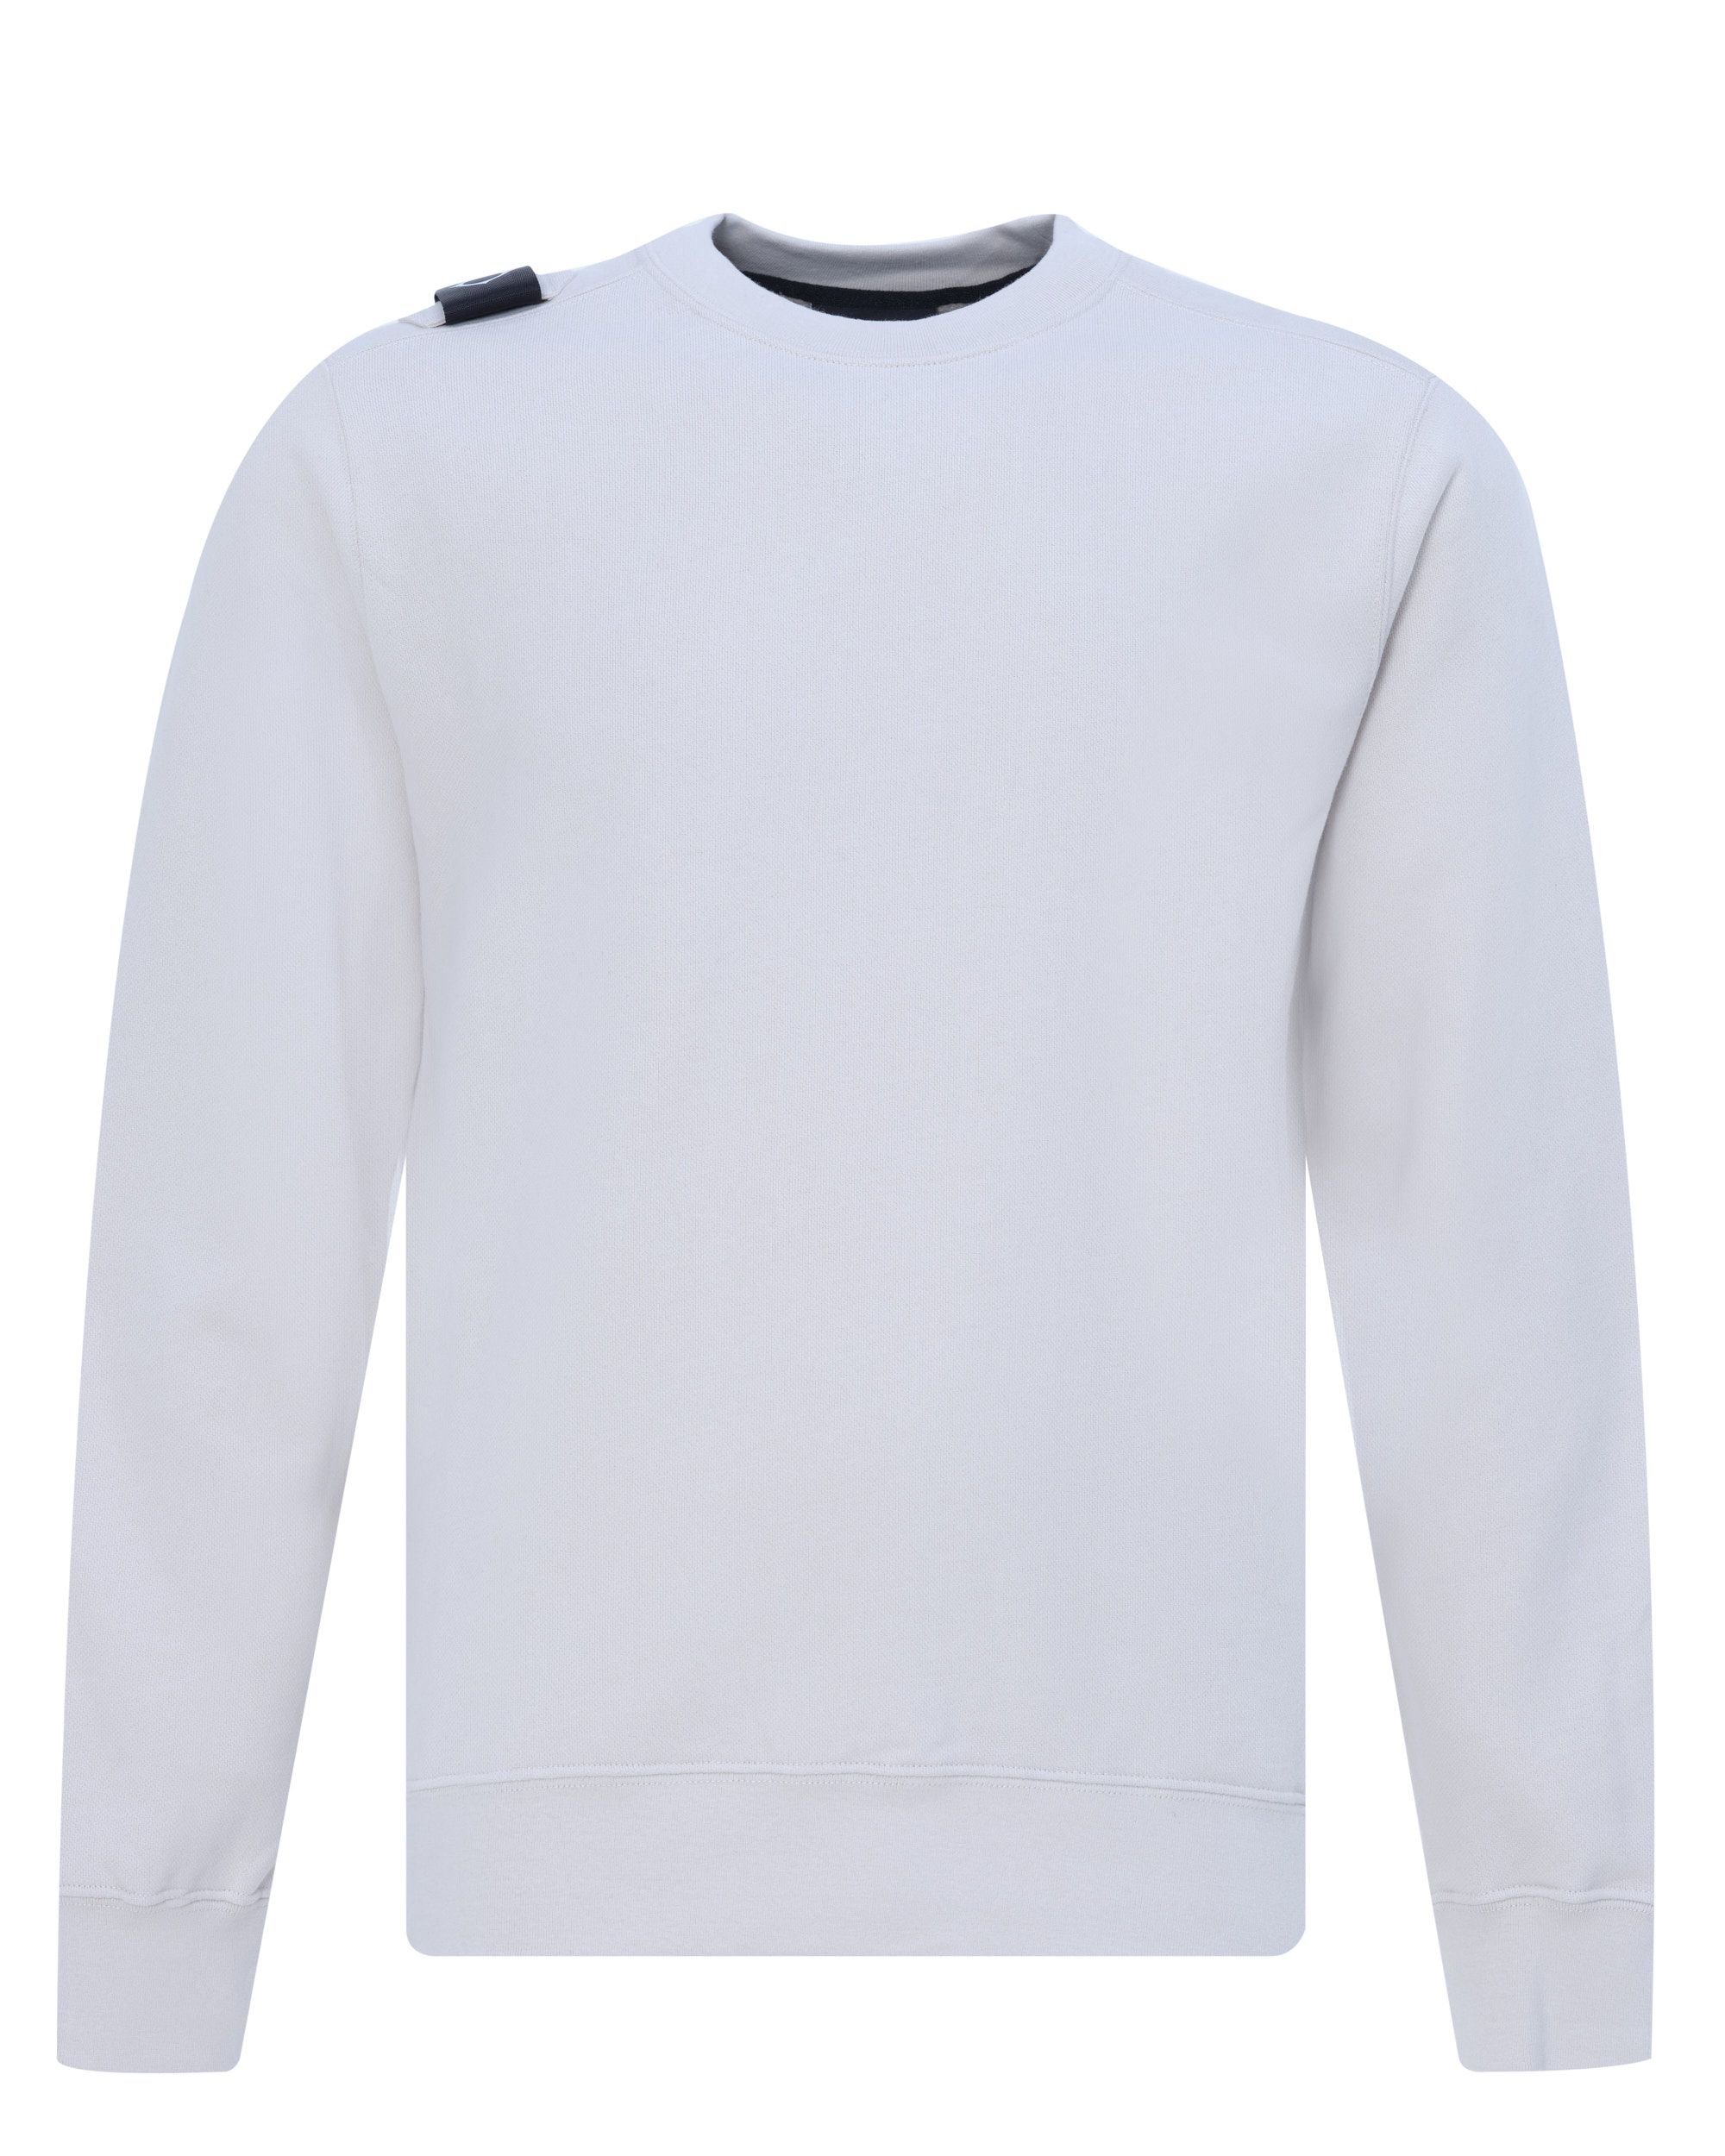 MA.STRUM Sweater Grijs 081001-001-L